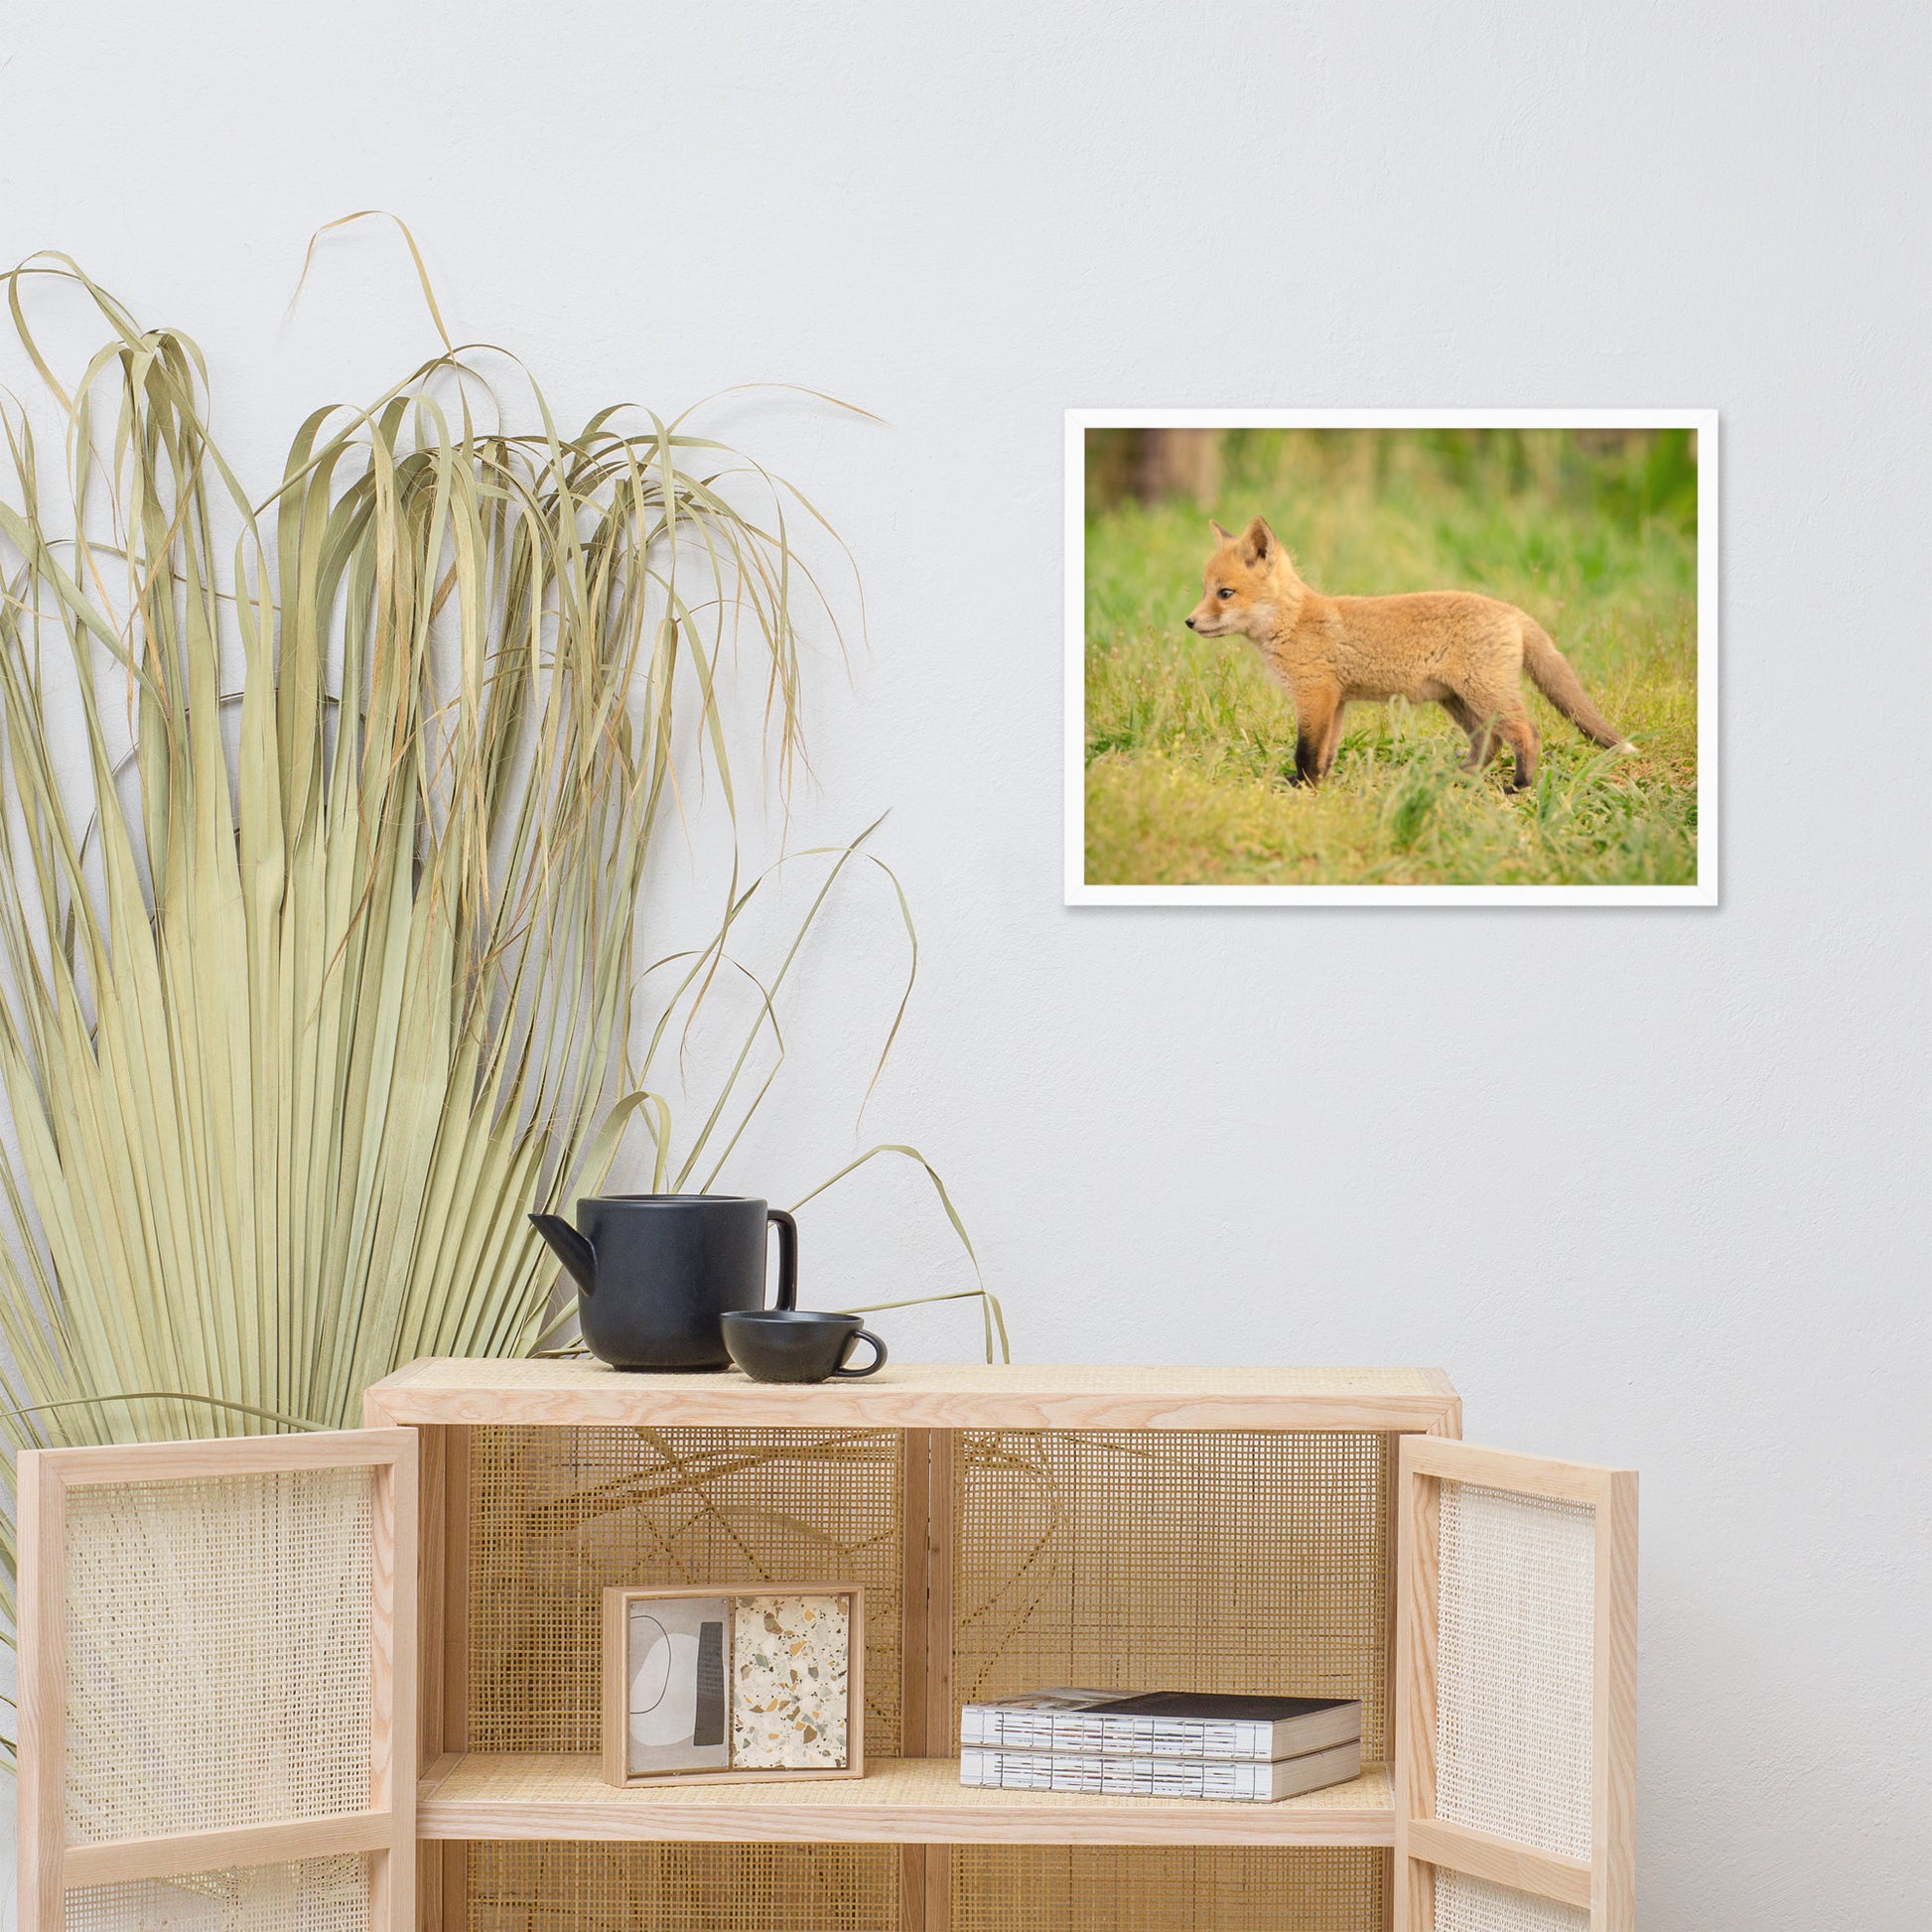 Nursery Wall Art Decor: Baby Fox Pup In Meadow/ Animal / Wildlife / Nature Photographic Artwork - Framed Artwork - Wall Decor